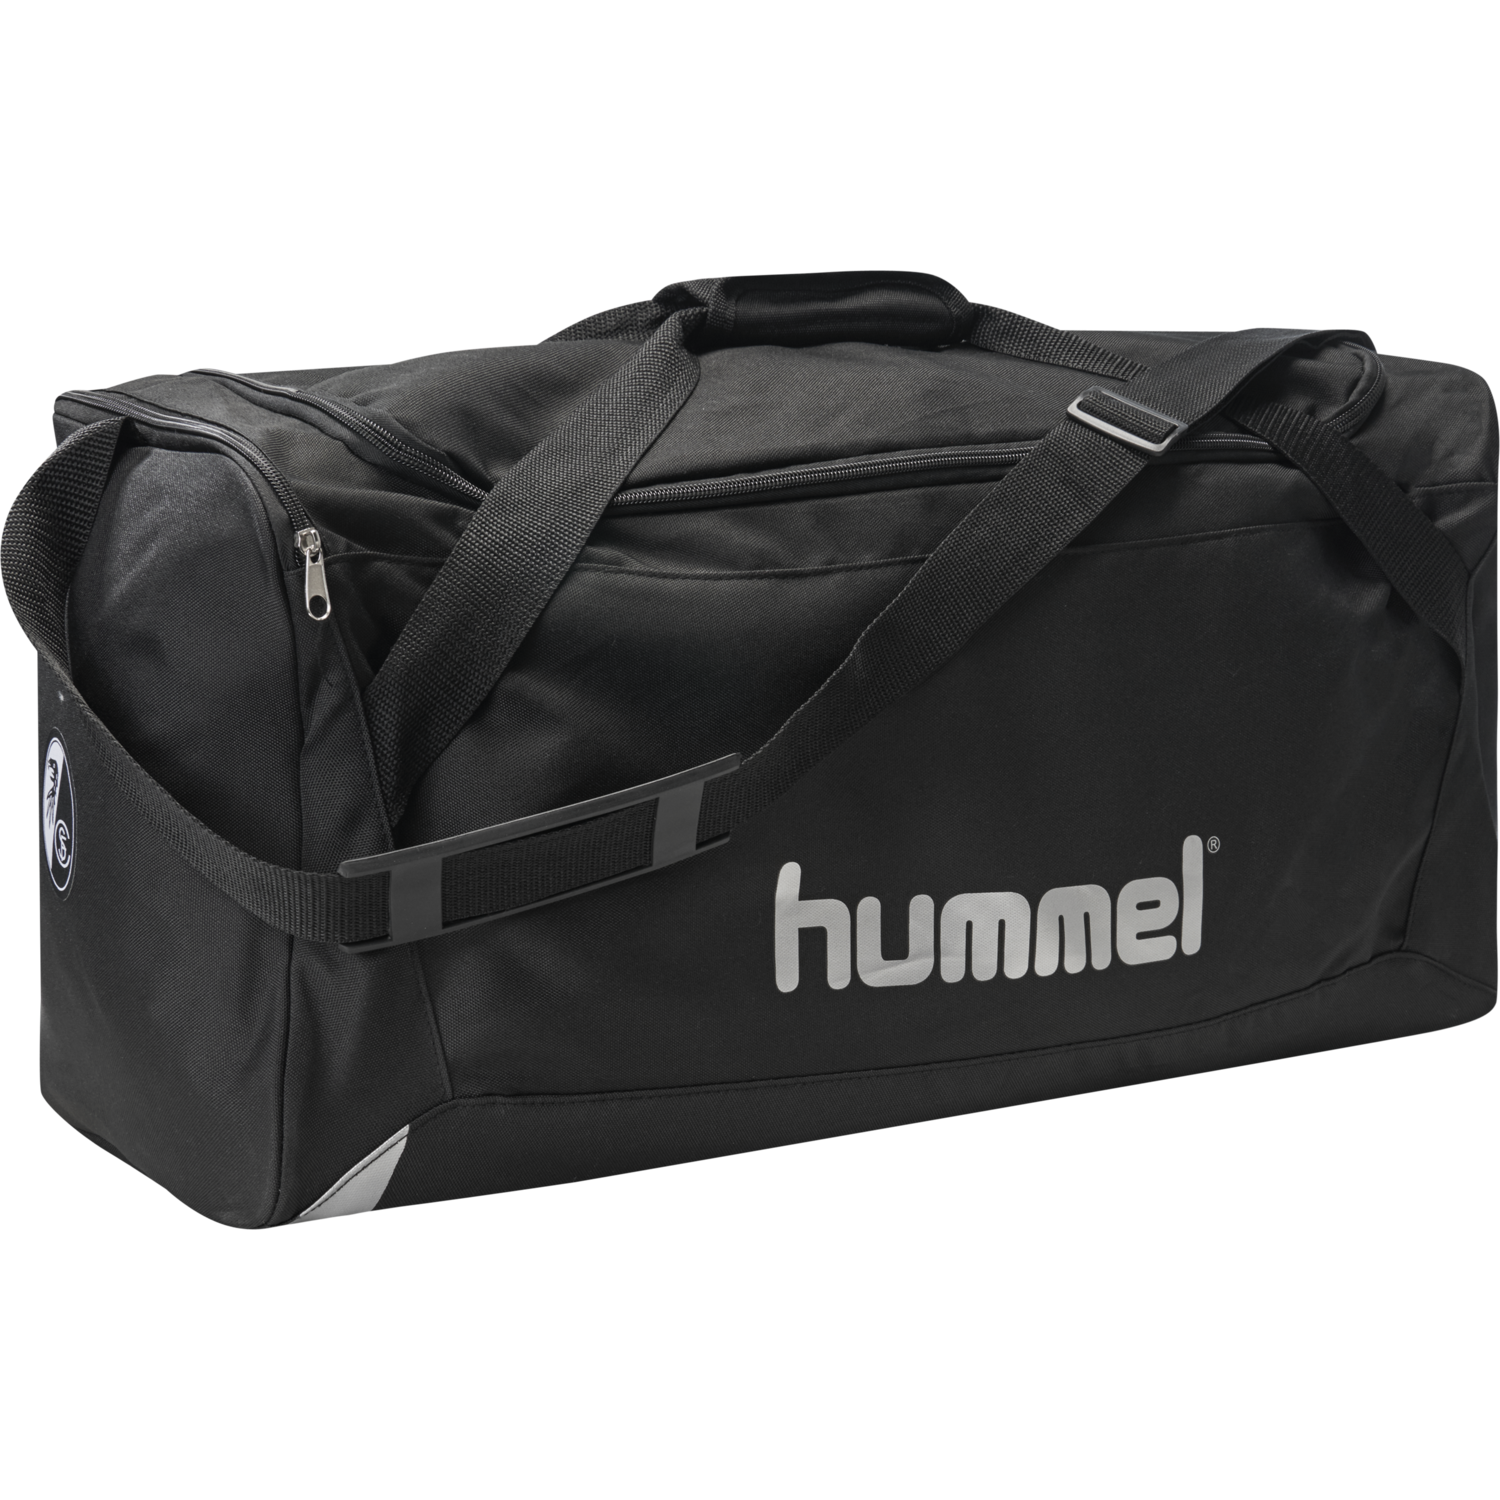 Hummel access Gym Bag Leisure Fitness Sports Bag Gym Bag 205917 Blue NEW 